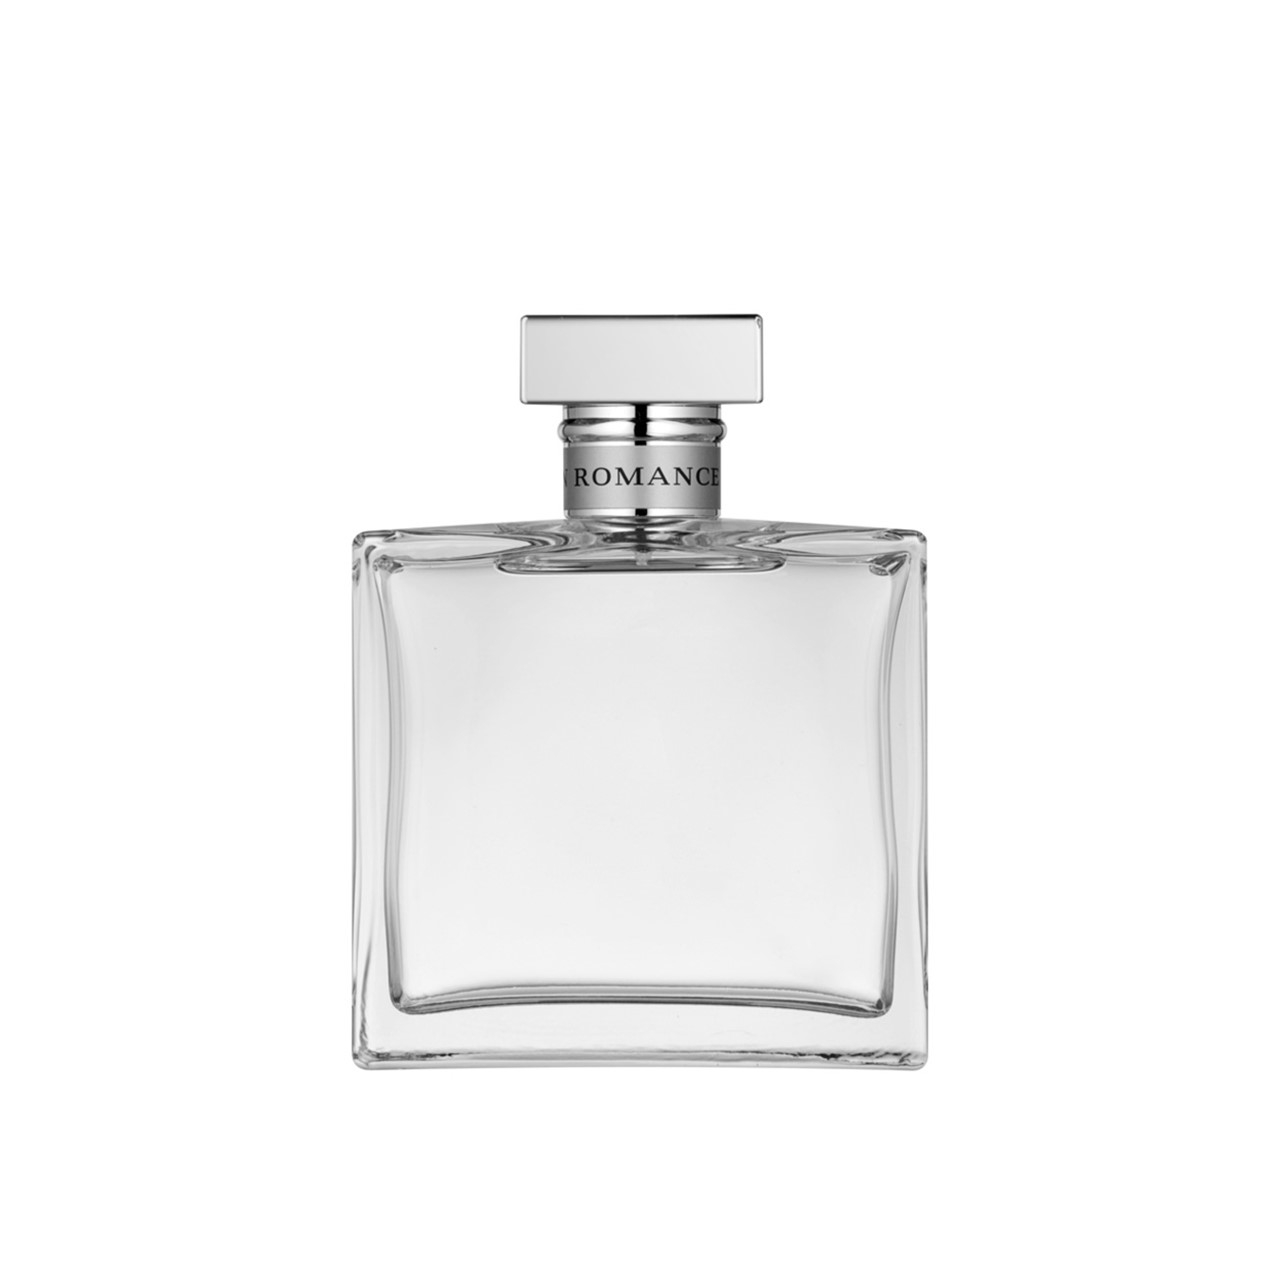 https://static.beautytocare.com/media/catalog/product/r/a/ralph-lauren-romance-eau-de-parfum-100ml_1.jpg